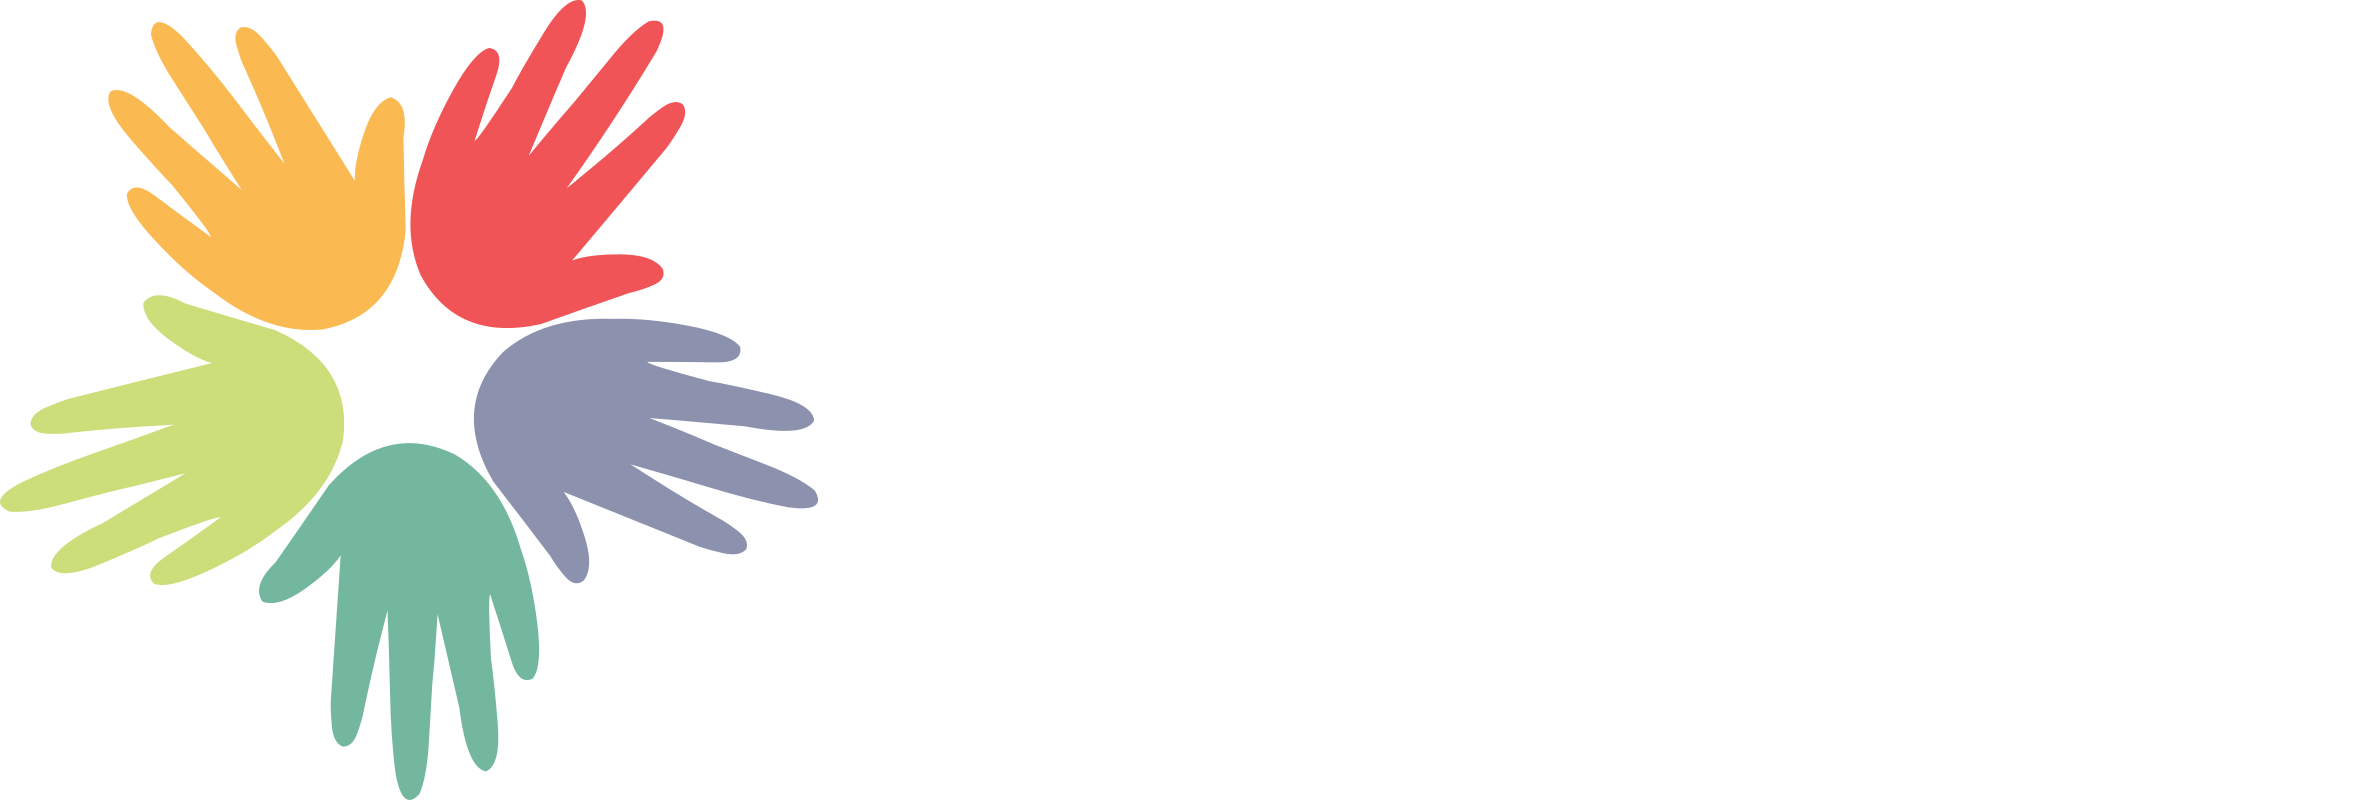 https://www.ayex.es/ayexlegal/wp-content/uploads/2020/01/400dpiLogoCropped2.png